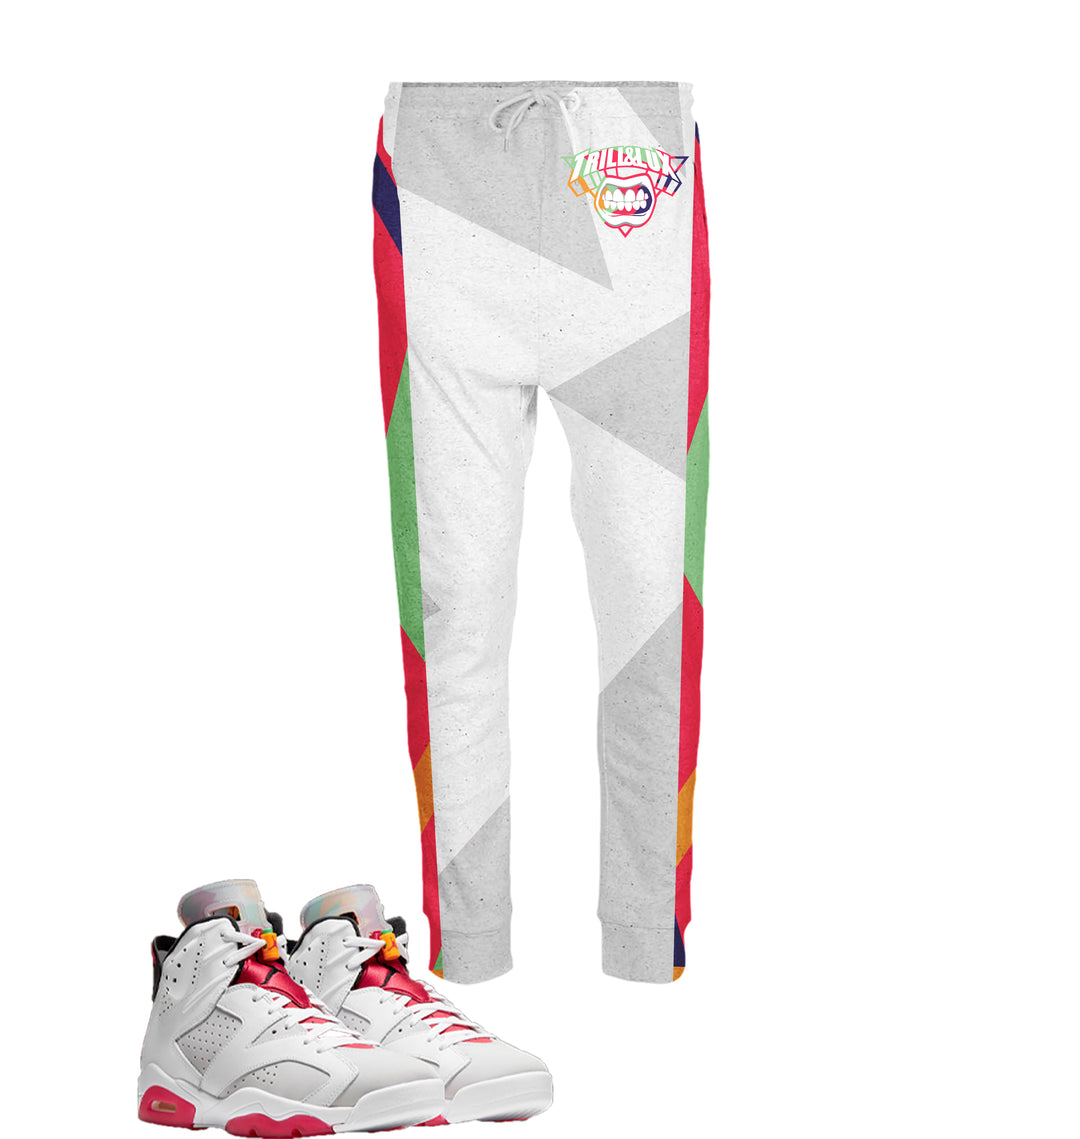 Trill & Lux | Jordan 6 Hare Inspired Jogger and Hoodie Suit | Retro Jordan 6